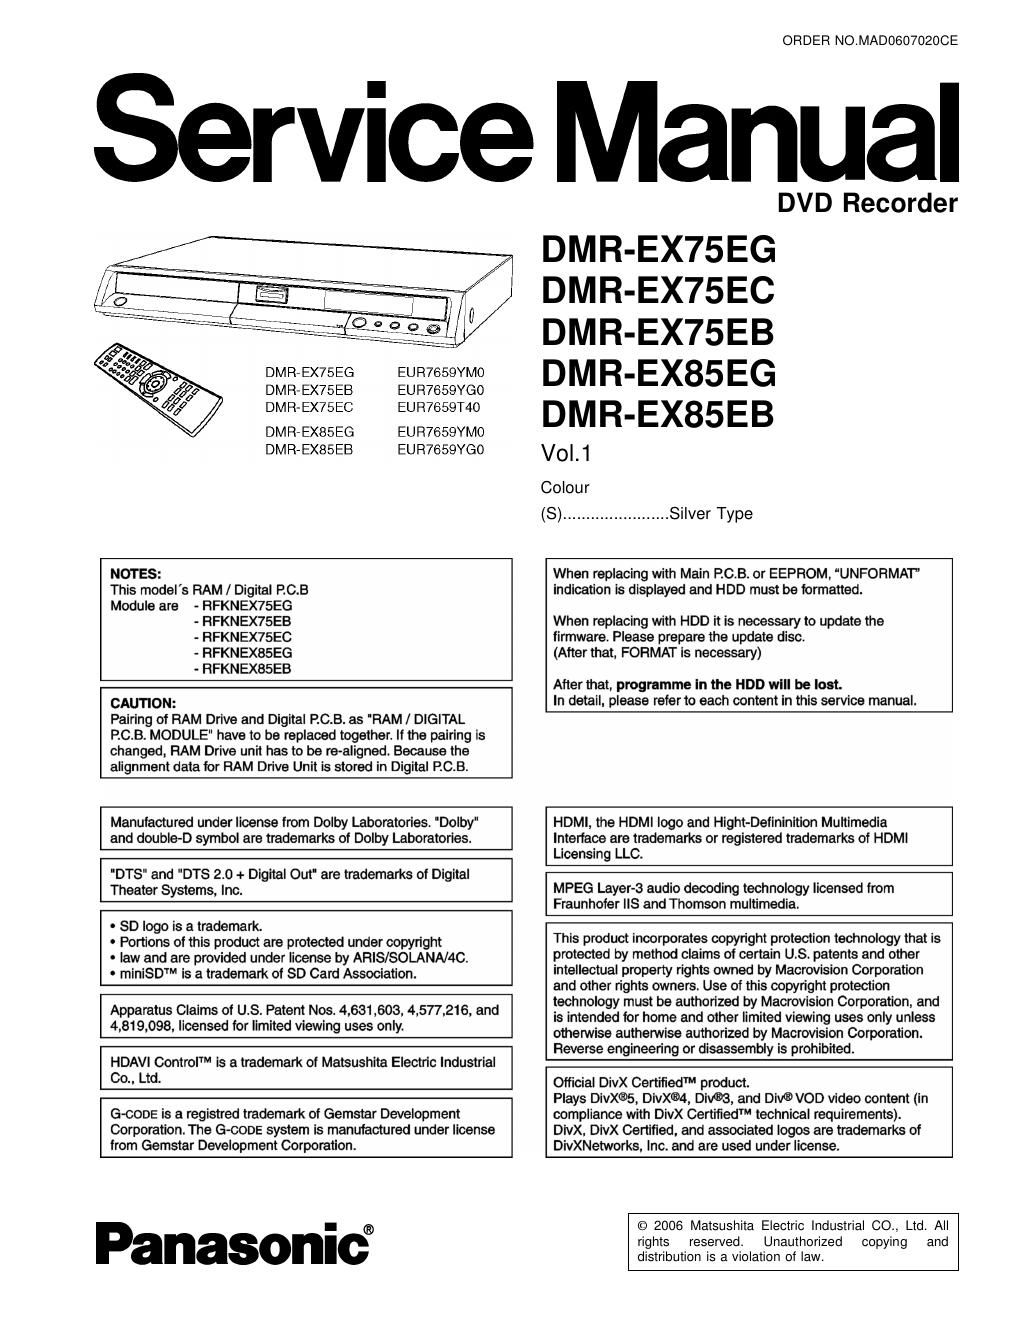 panasonic dmr ex 75 service manual